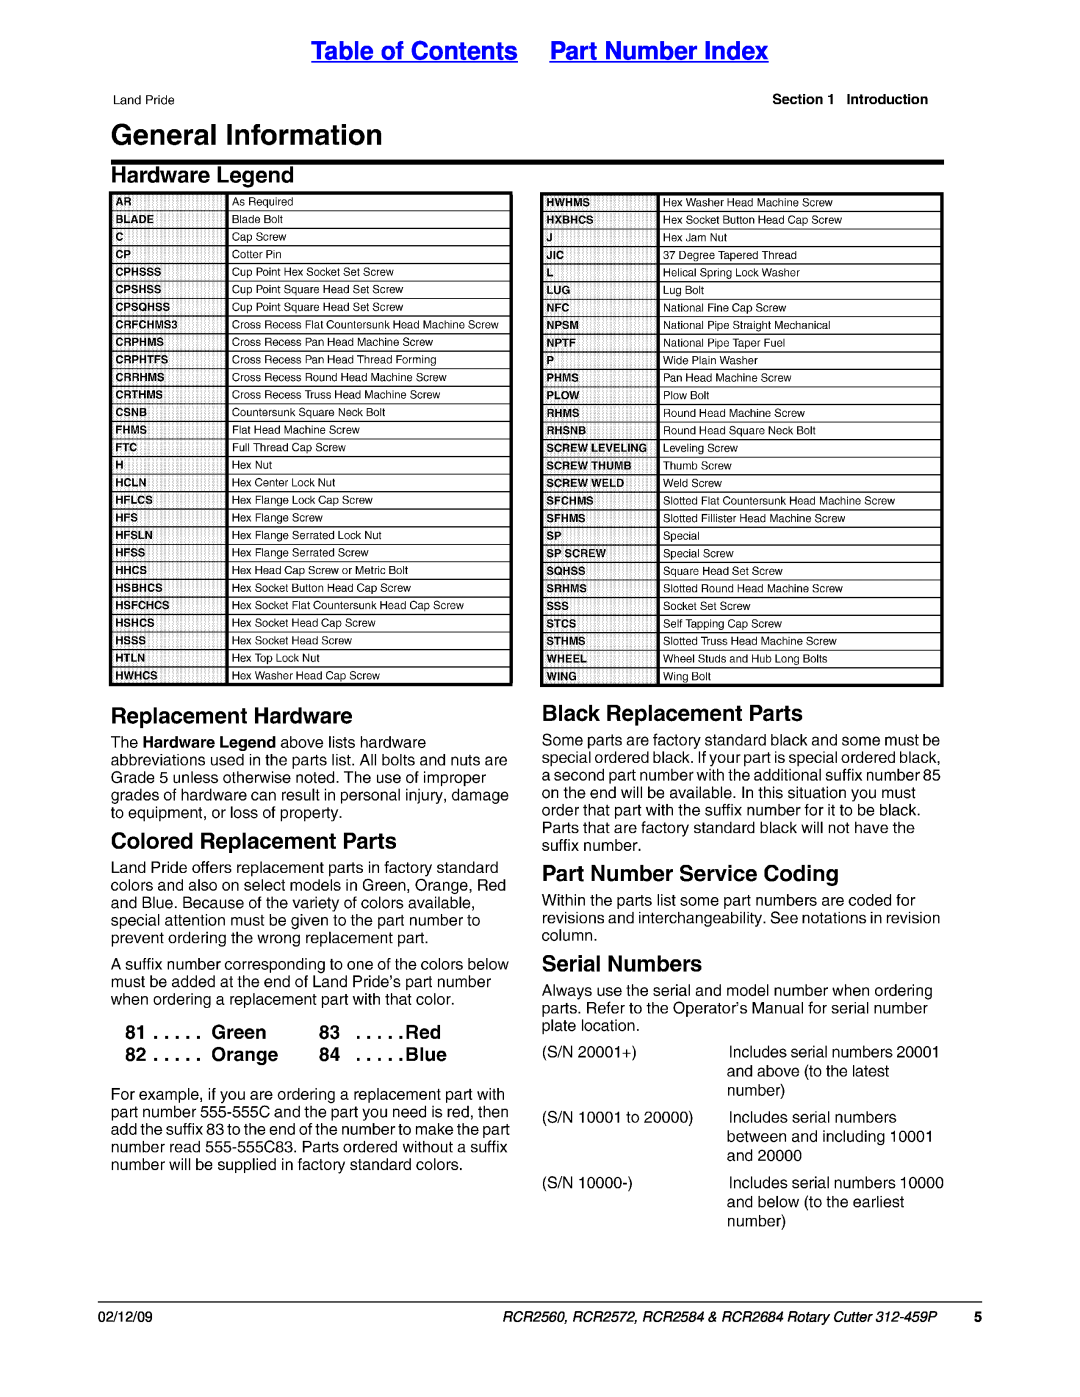 Land Pride RCR2584, RCR2684, RCR2572, RCR2560 manual Table of Contents Part Number Index, 02/12/09 